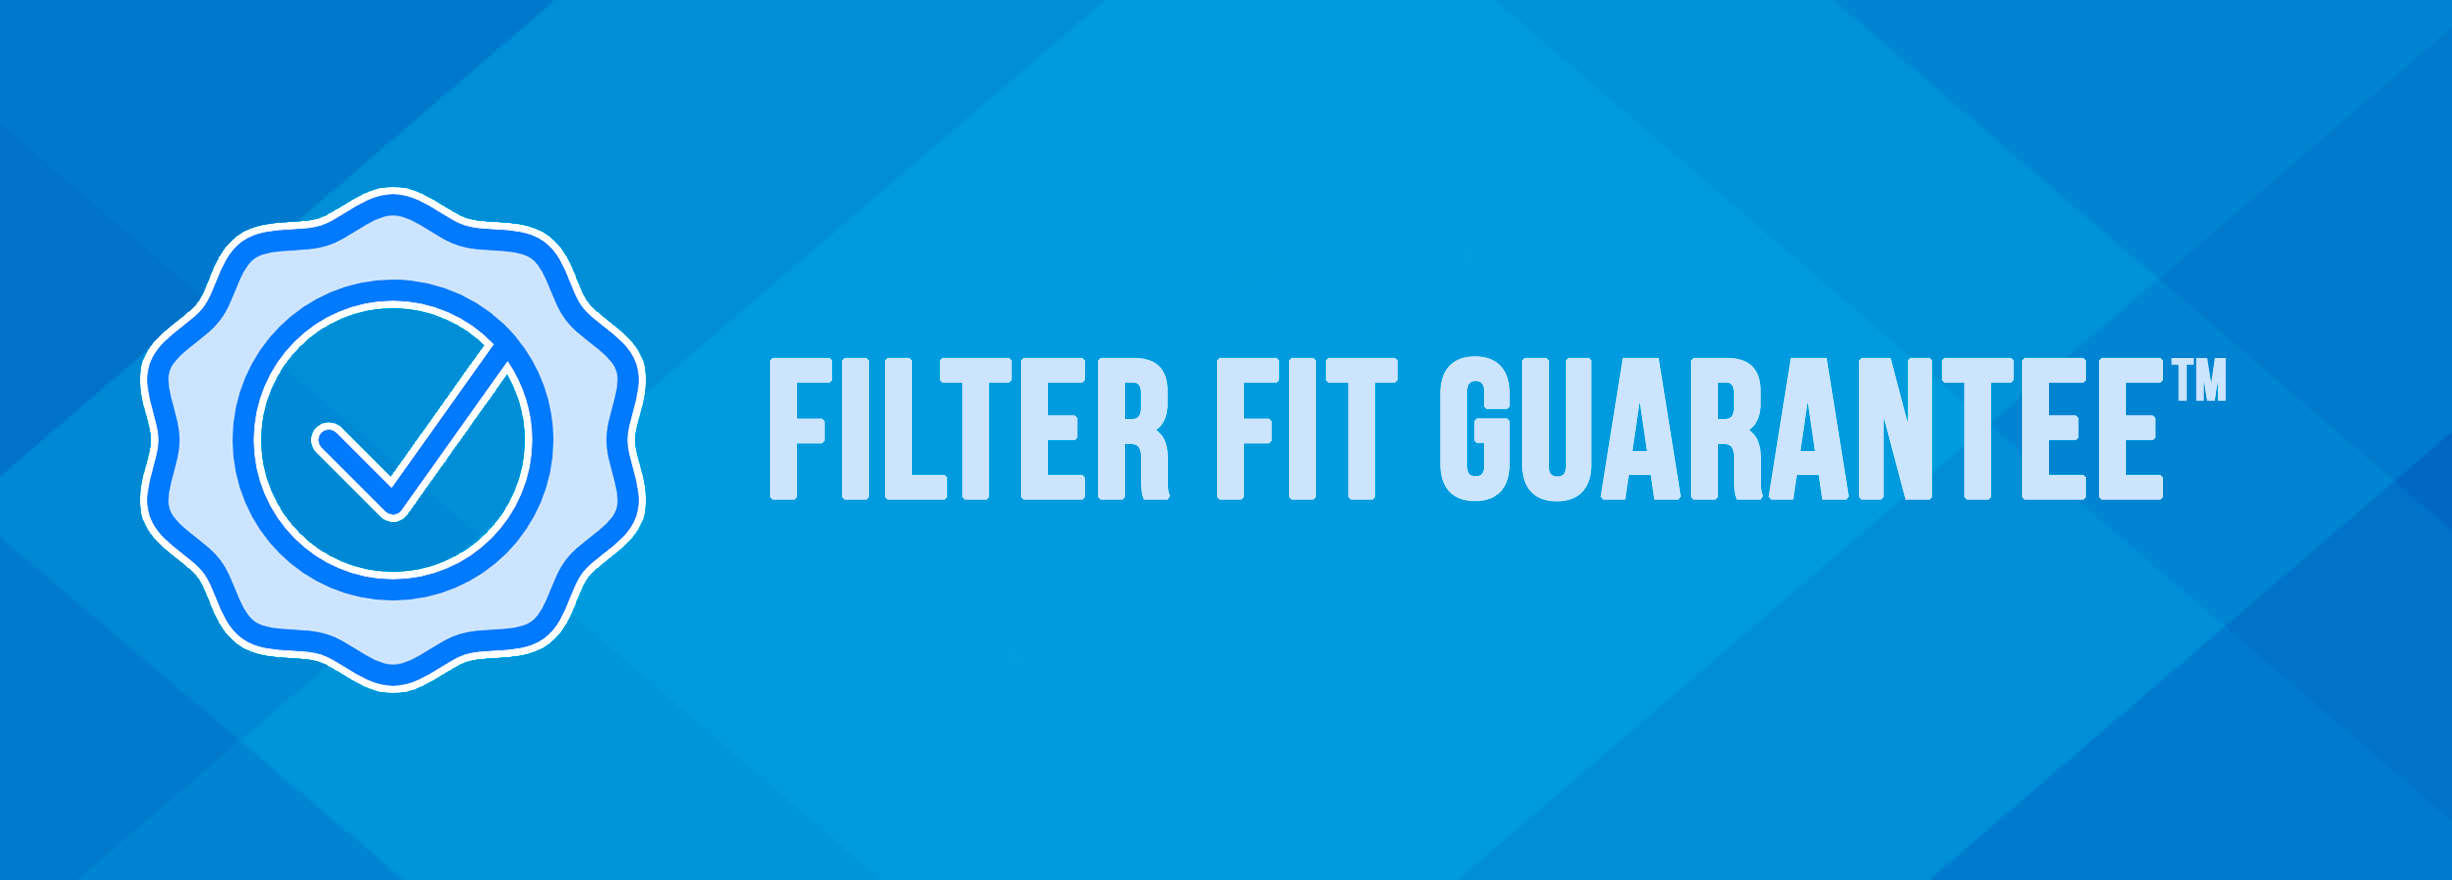 Filter Fit Guarantee